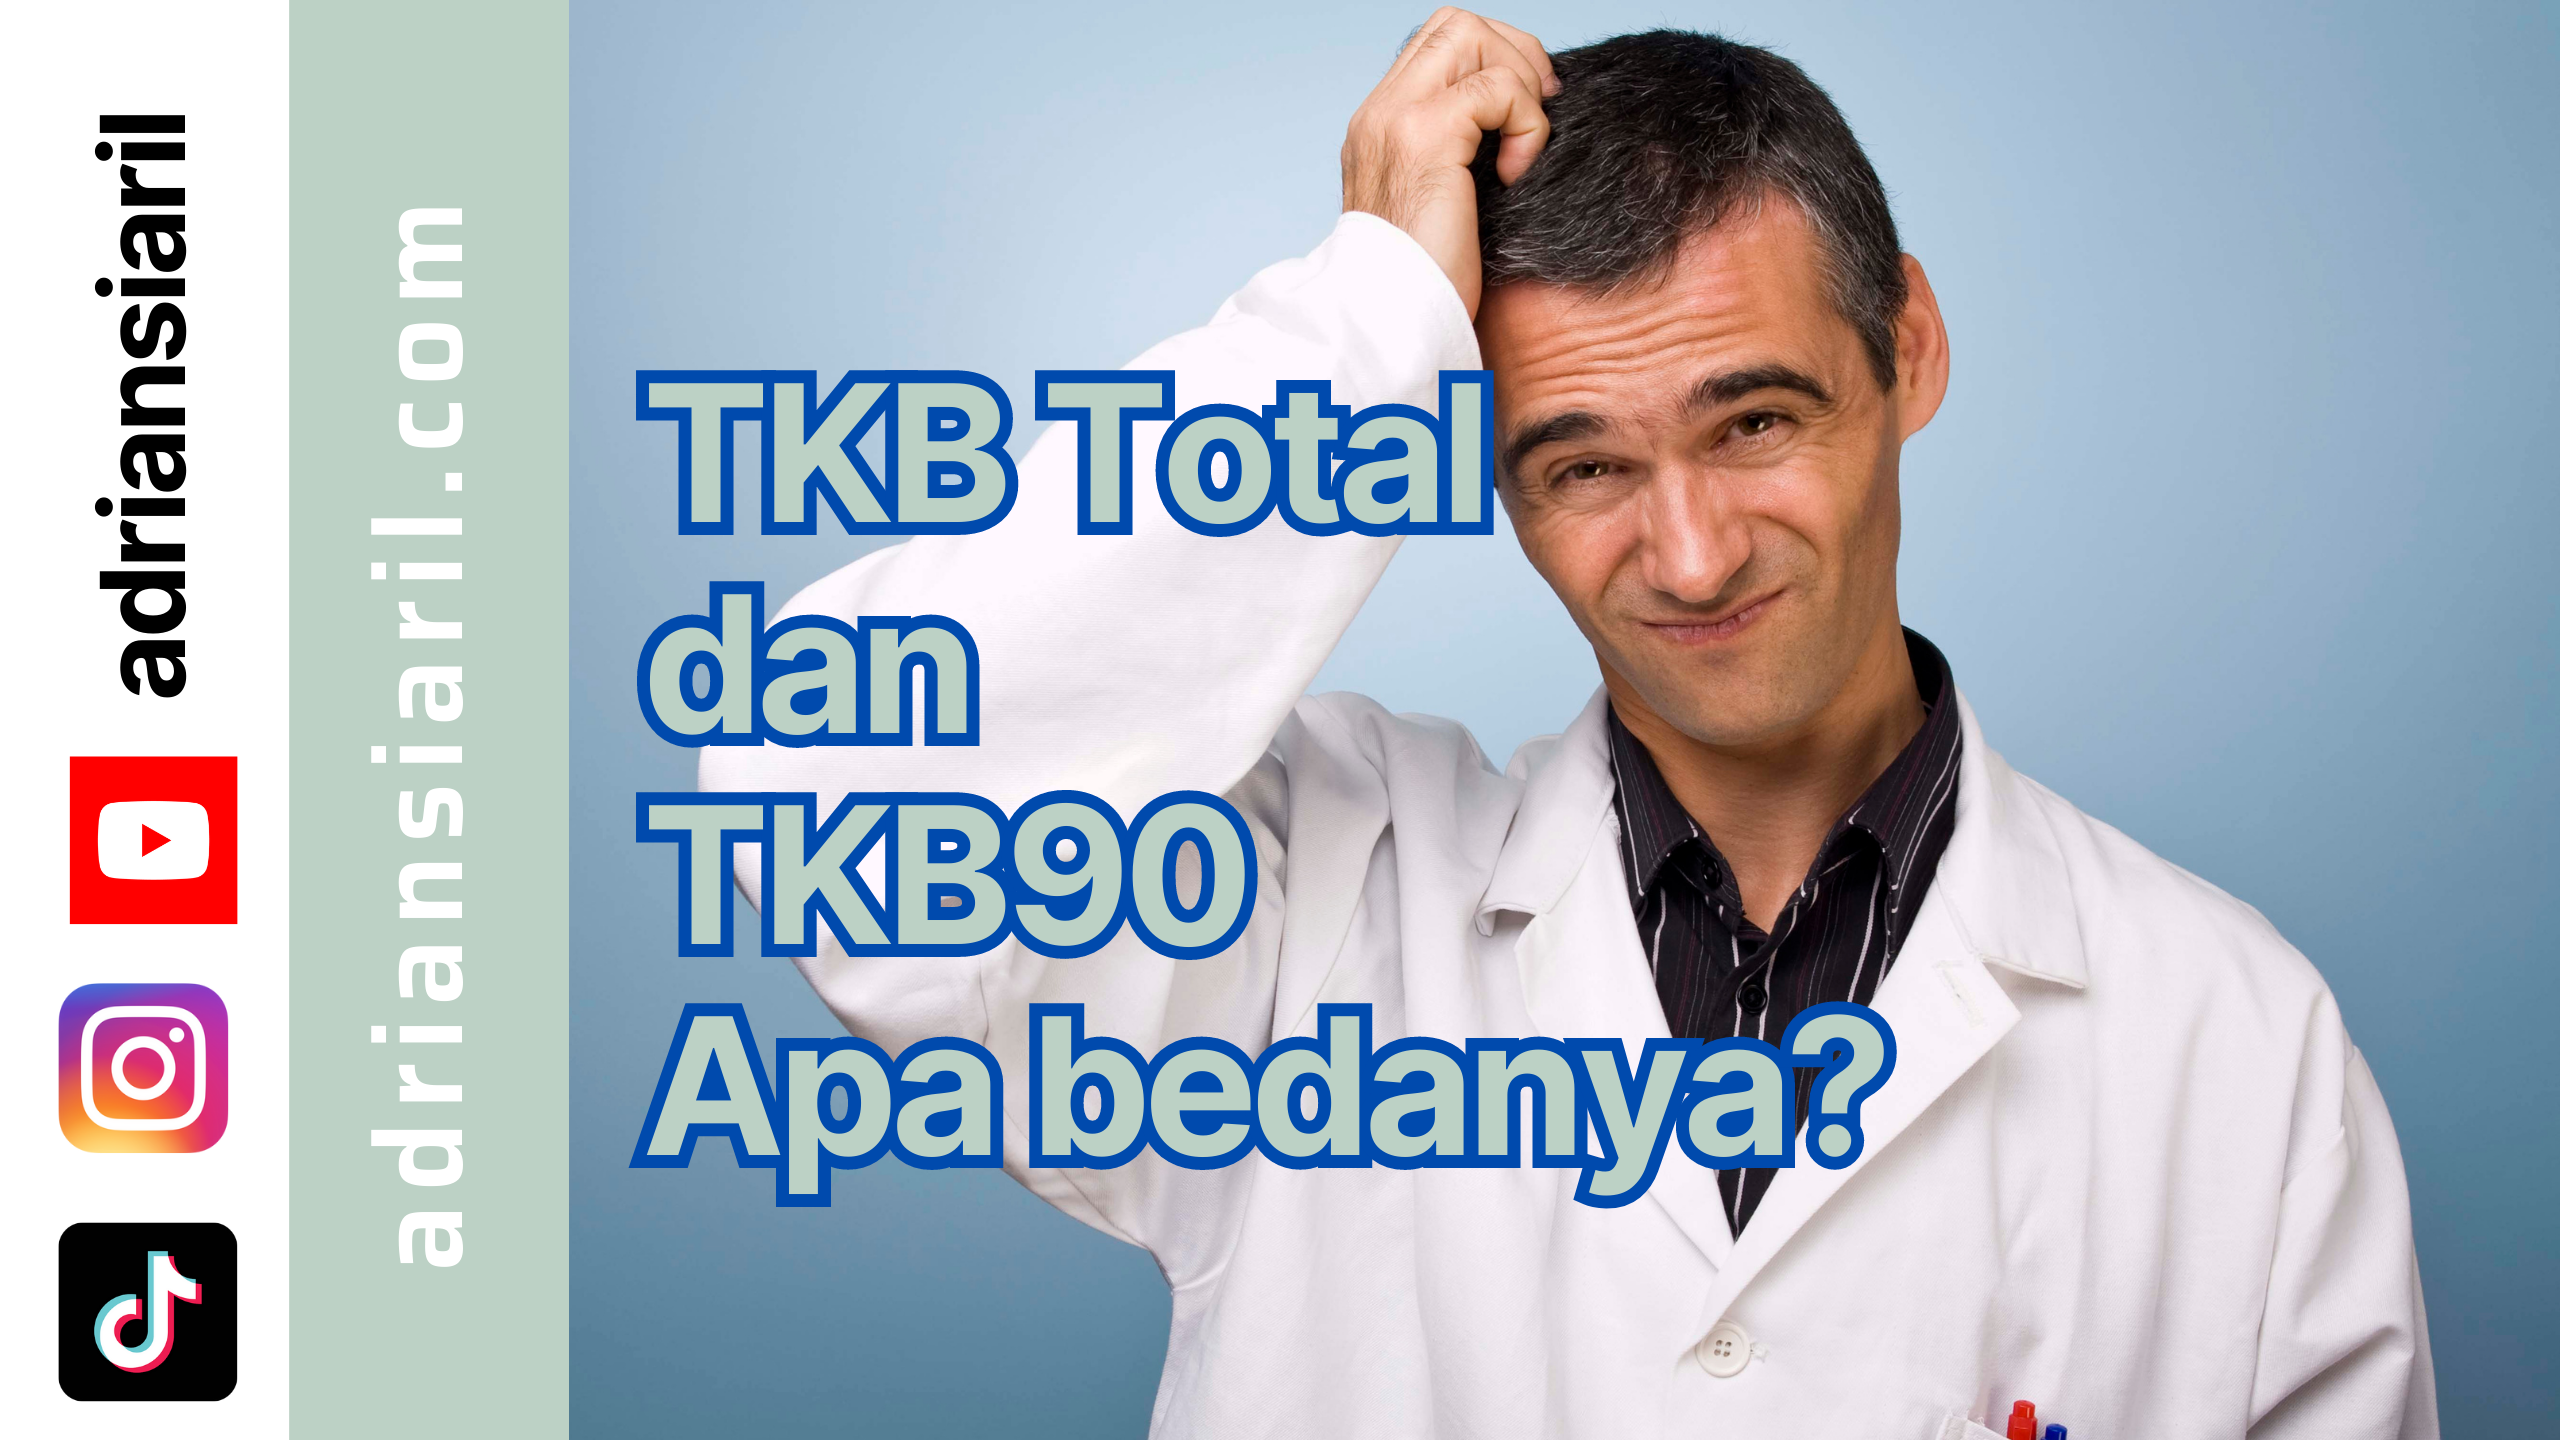 Perbedaan TKB90 dan TKB Total